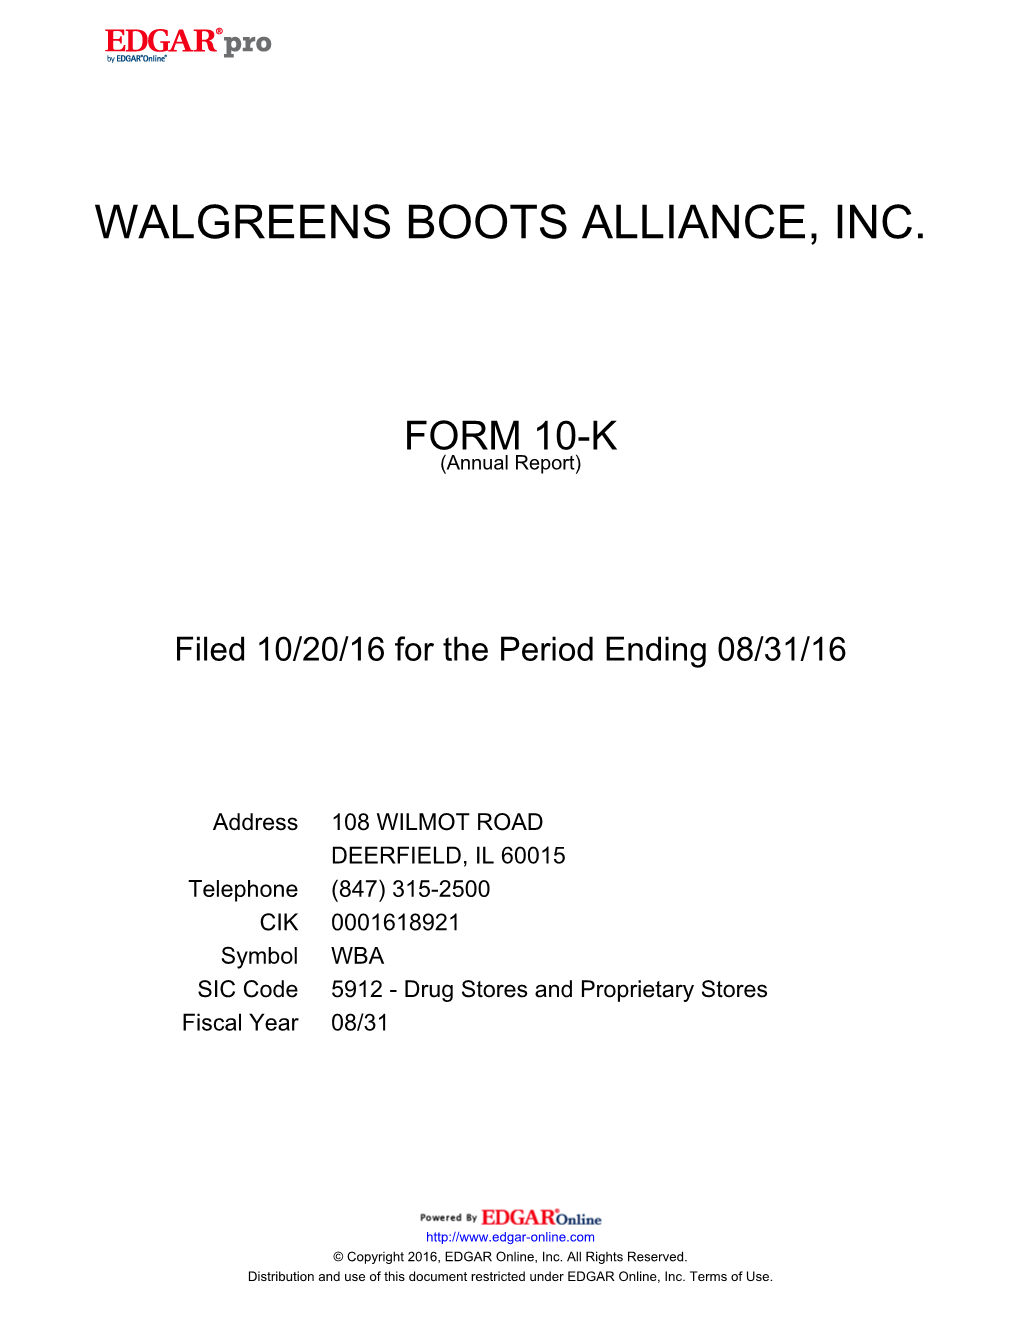 Walgreens Boots Alliance, Inc